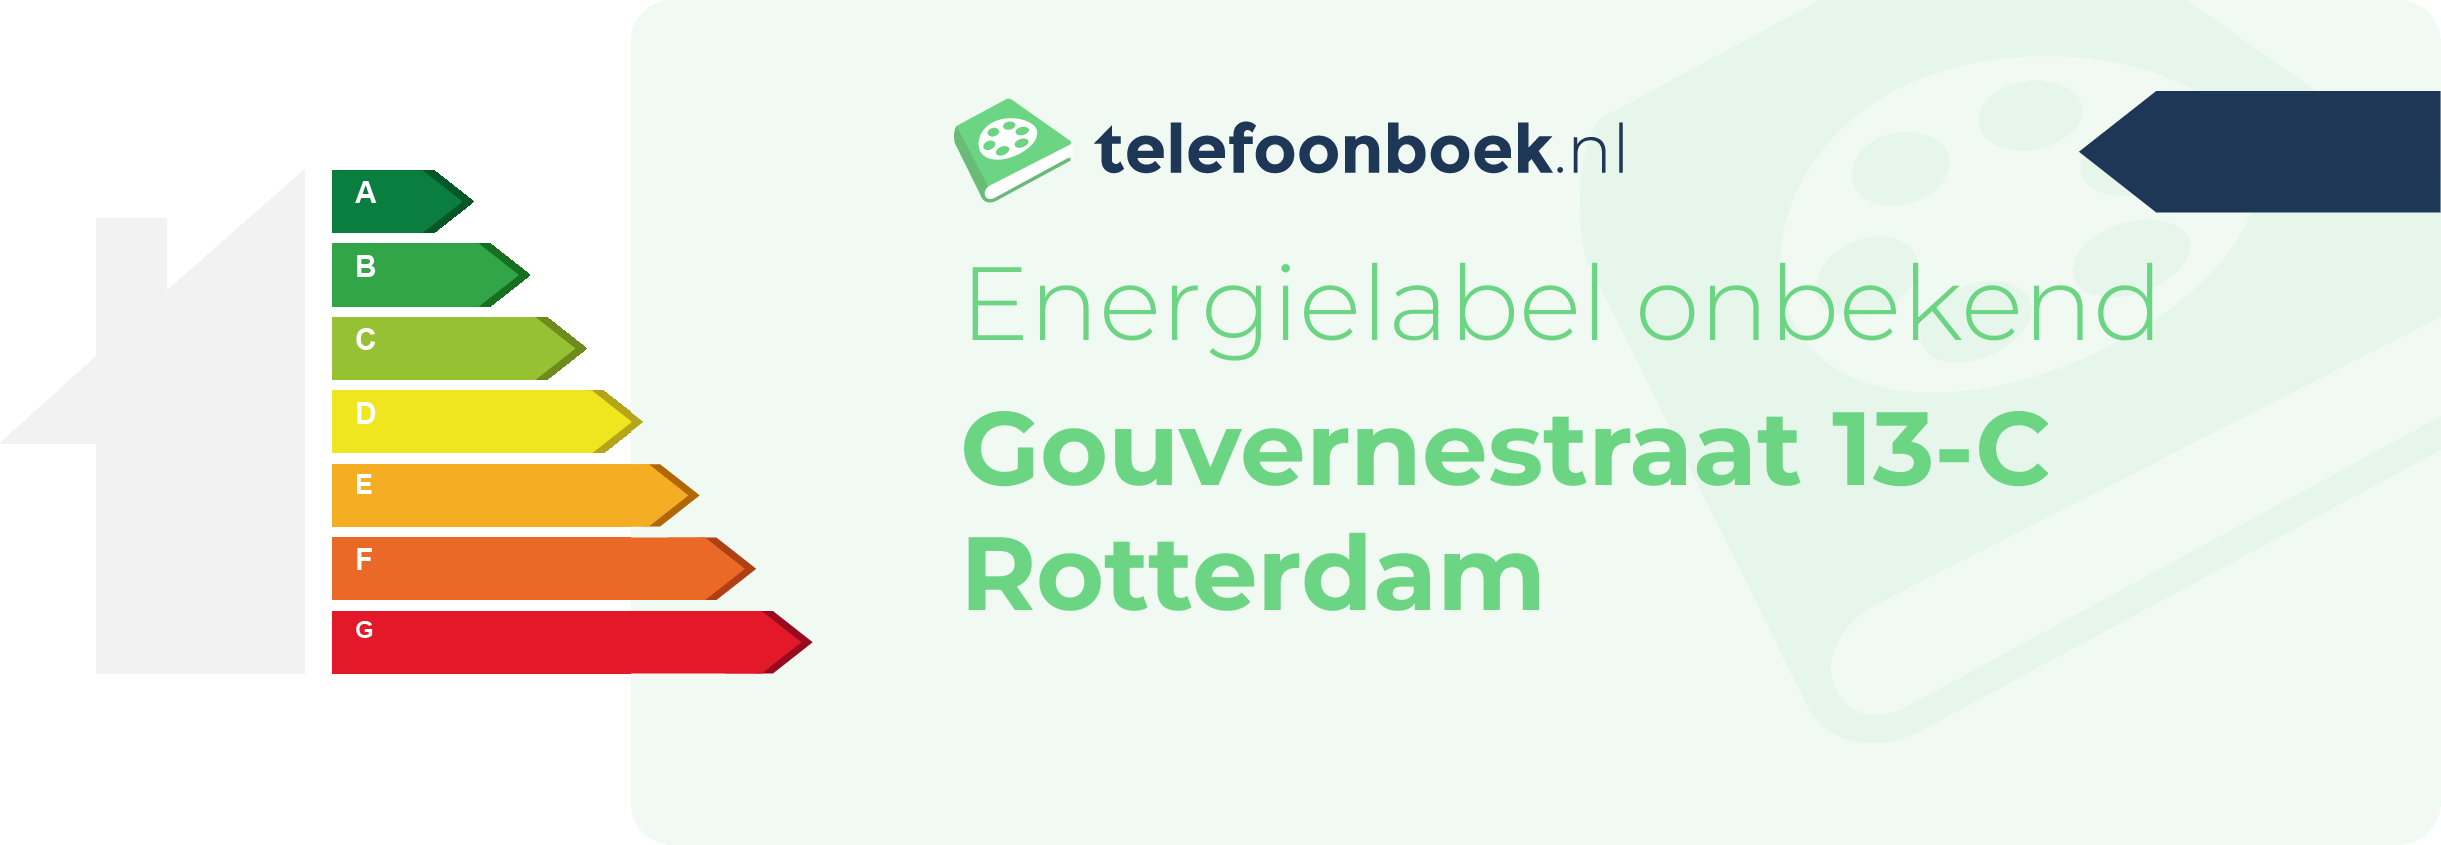 Energielabel Gouvernestraat 13-C Rotterdam